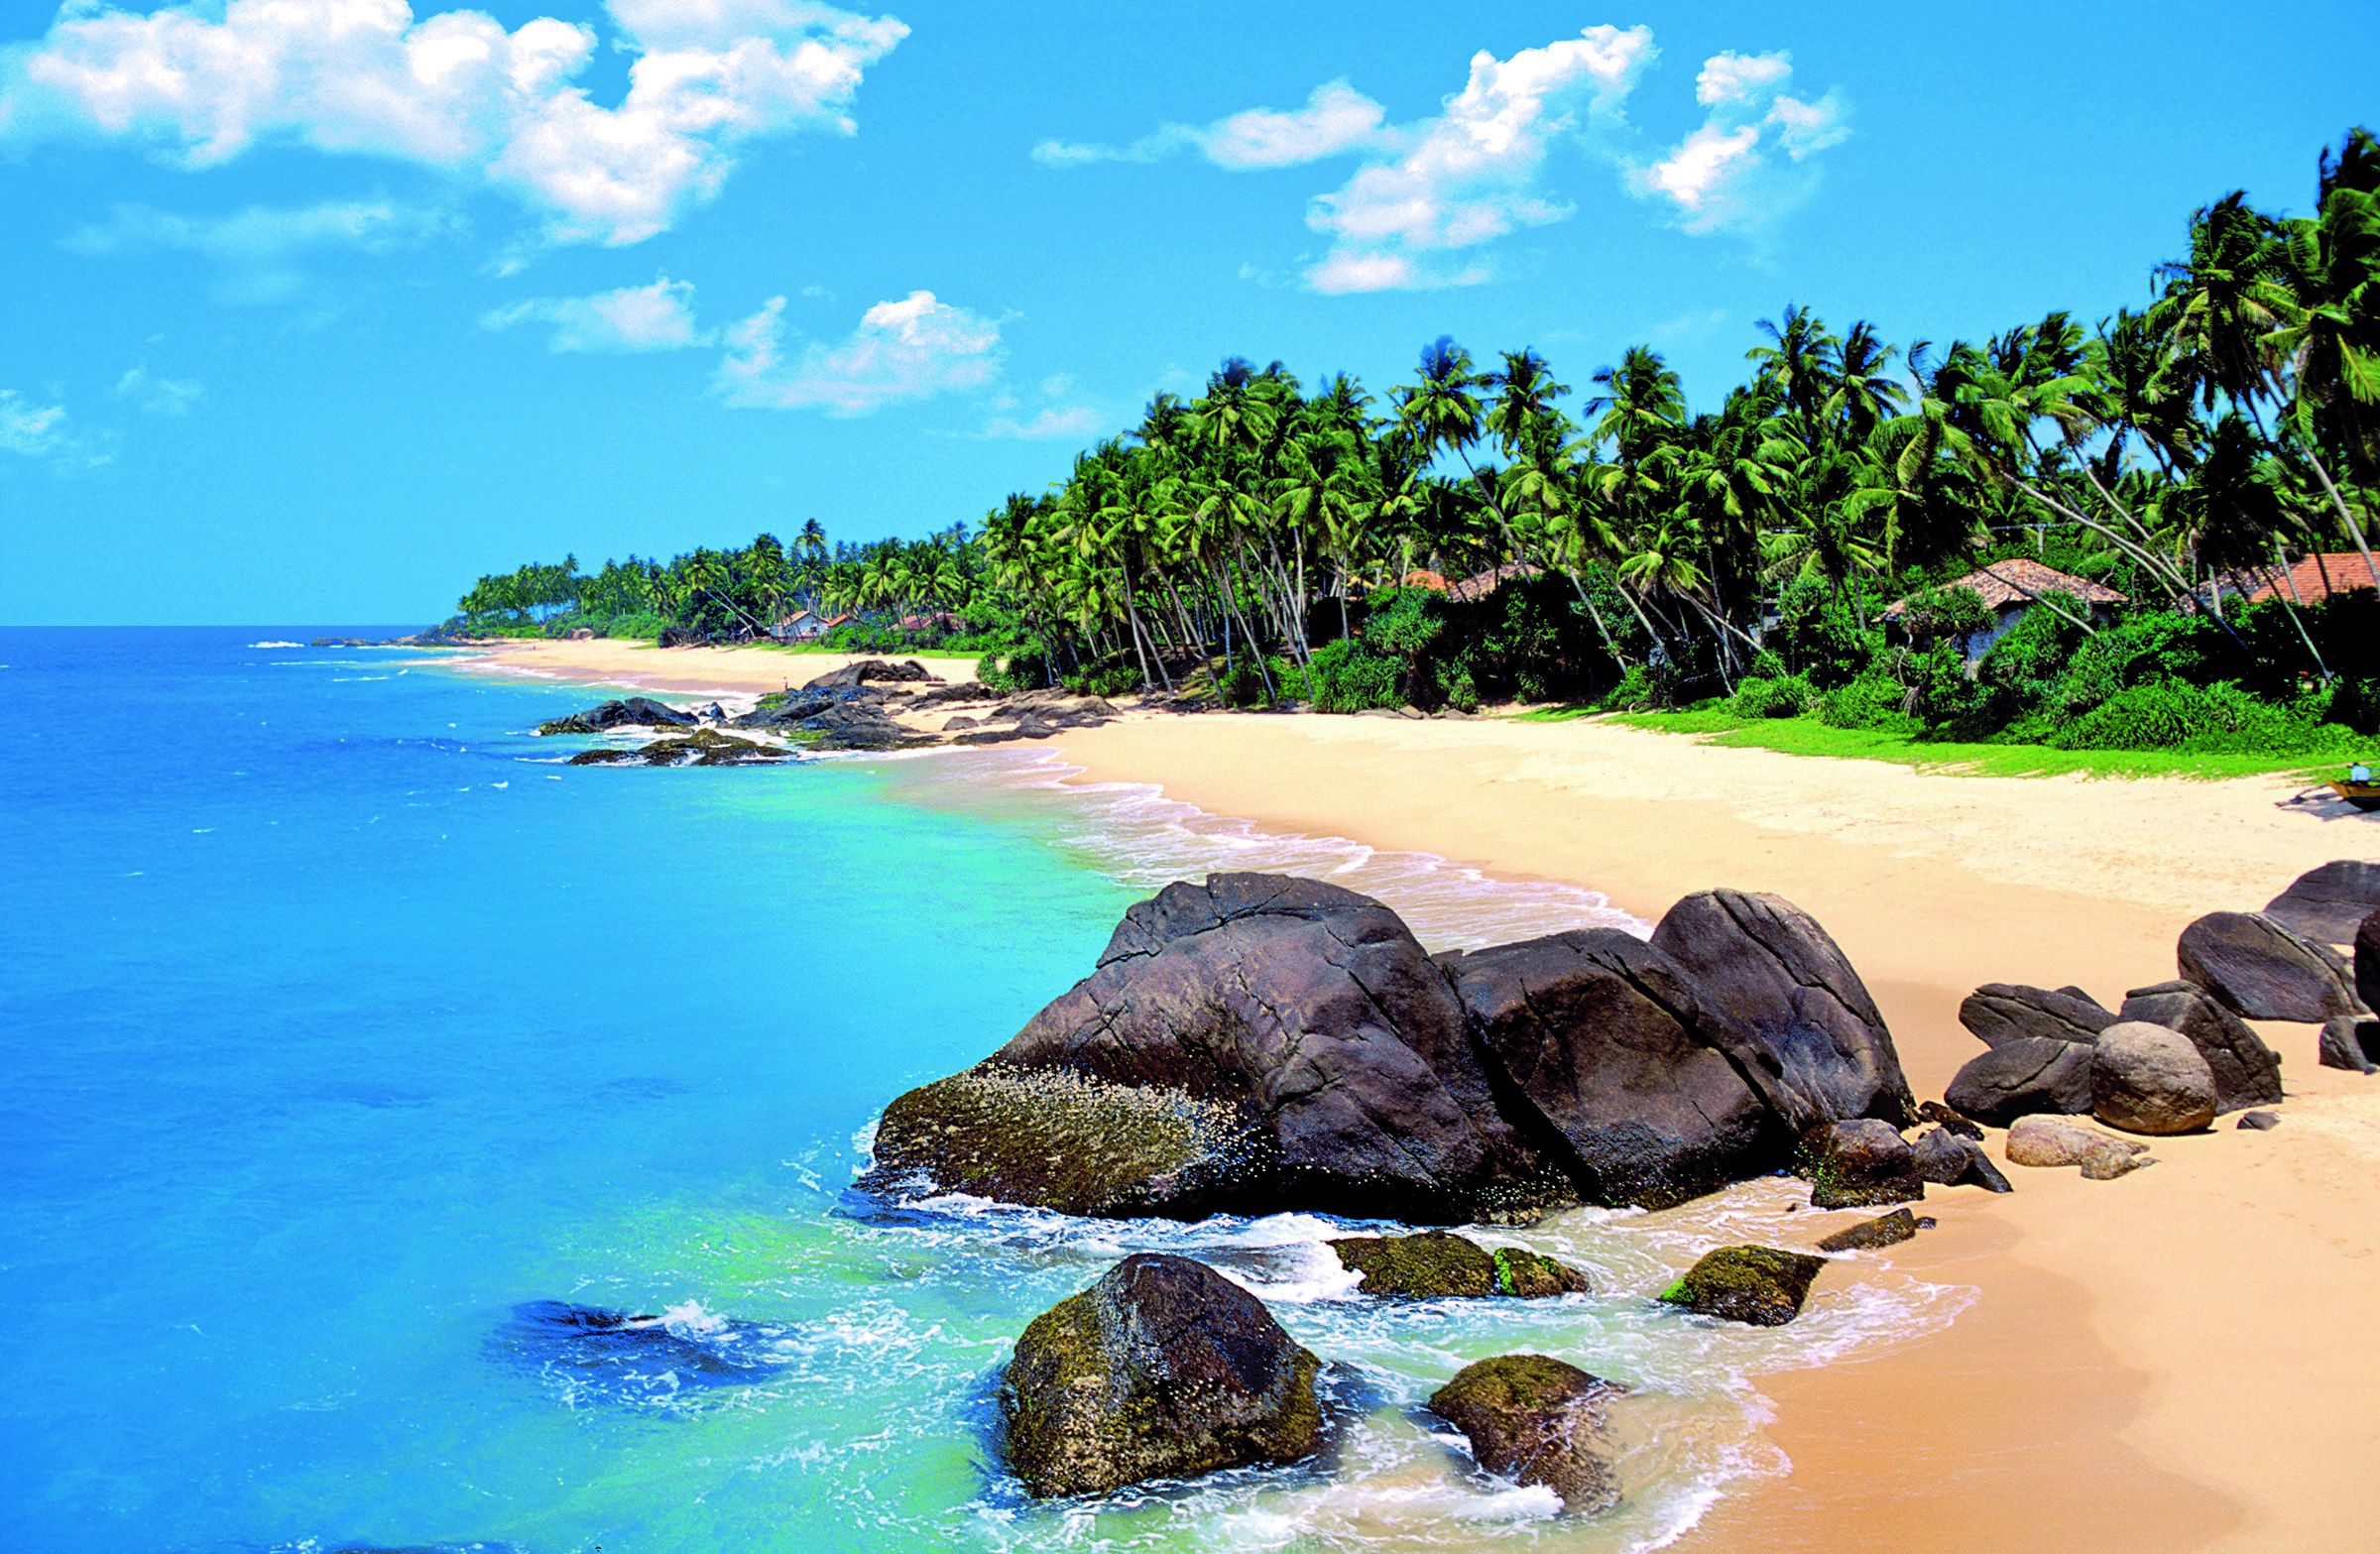 Шри ланка на ланкийском. Тангалла Шри Ланка. Побережье Тангалле Шри Ланка. Пляж Тангалла Шри Ланка. Остров Шри-Ланка в индийском океане.